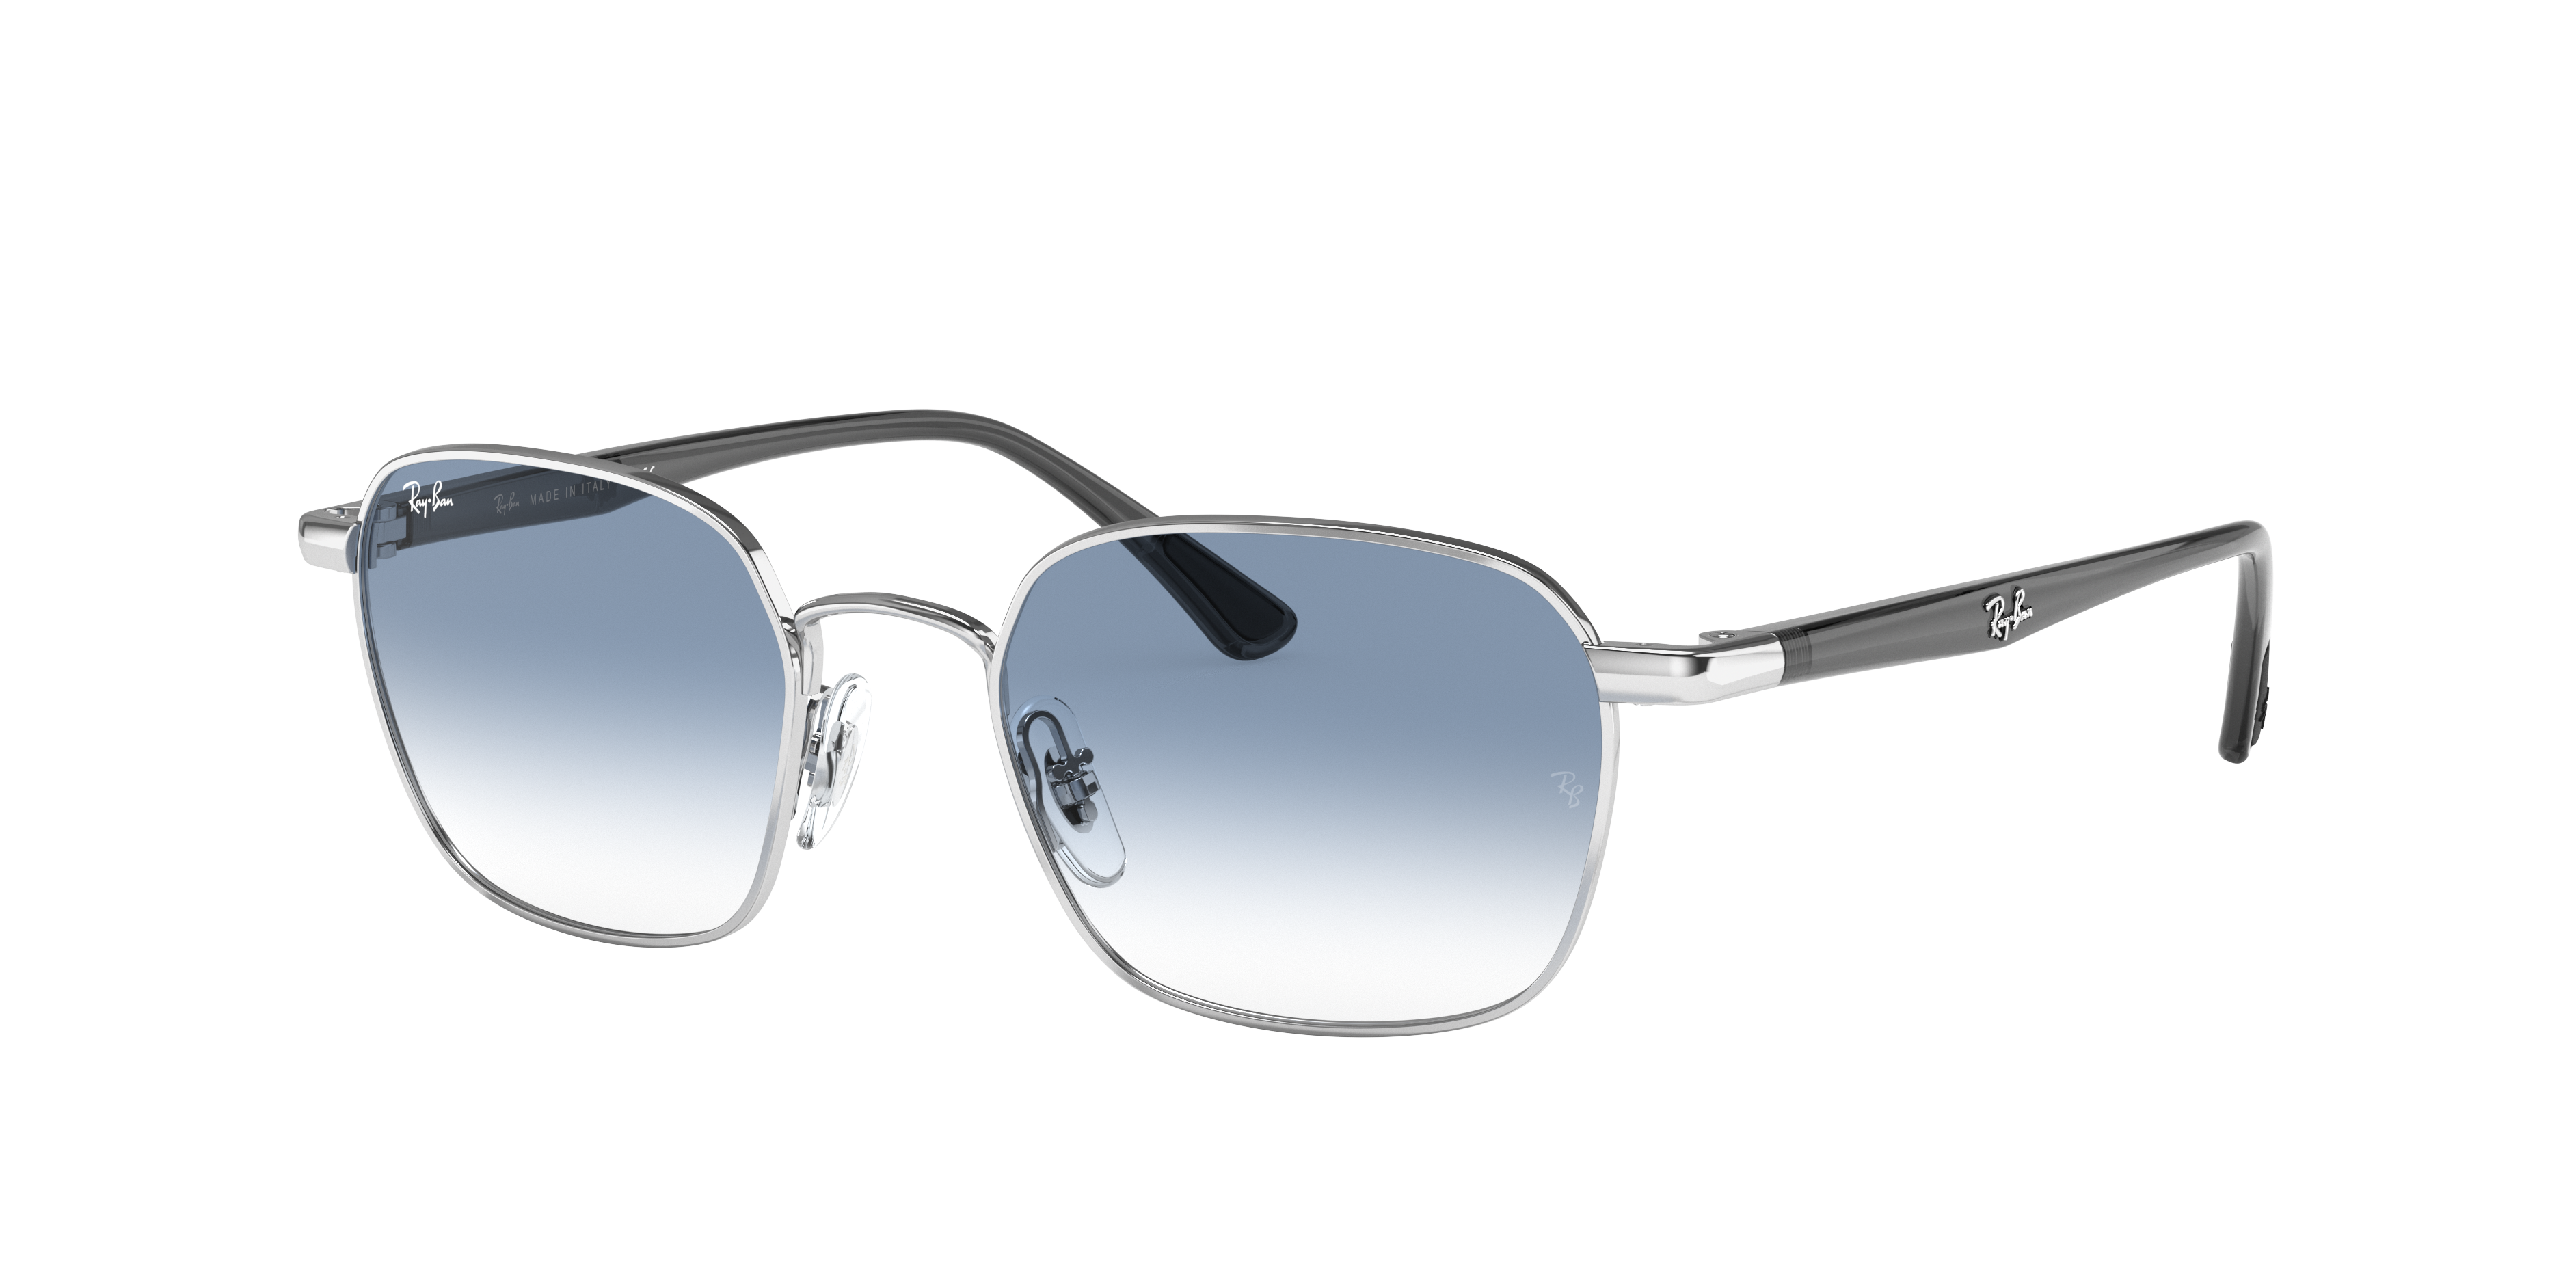 1950 ray ban sunglasses